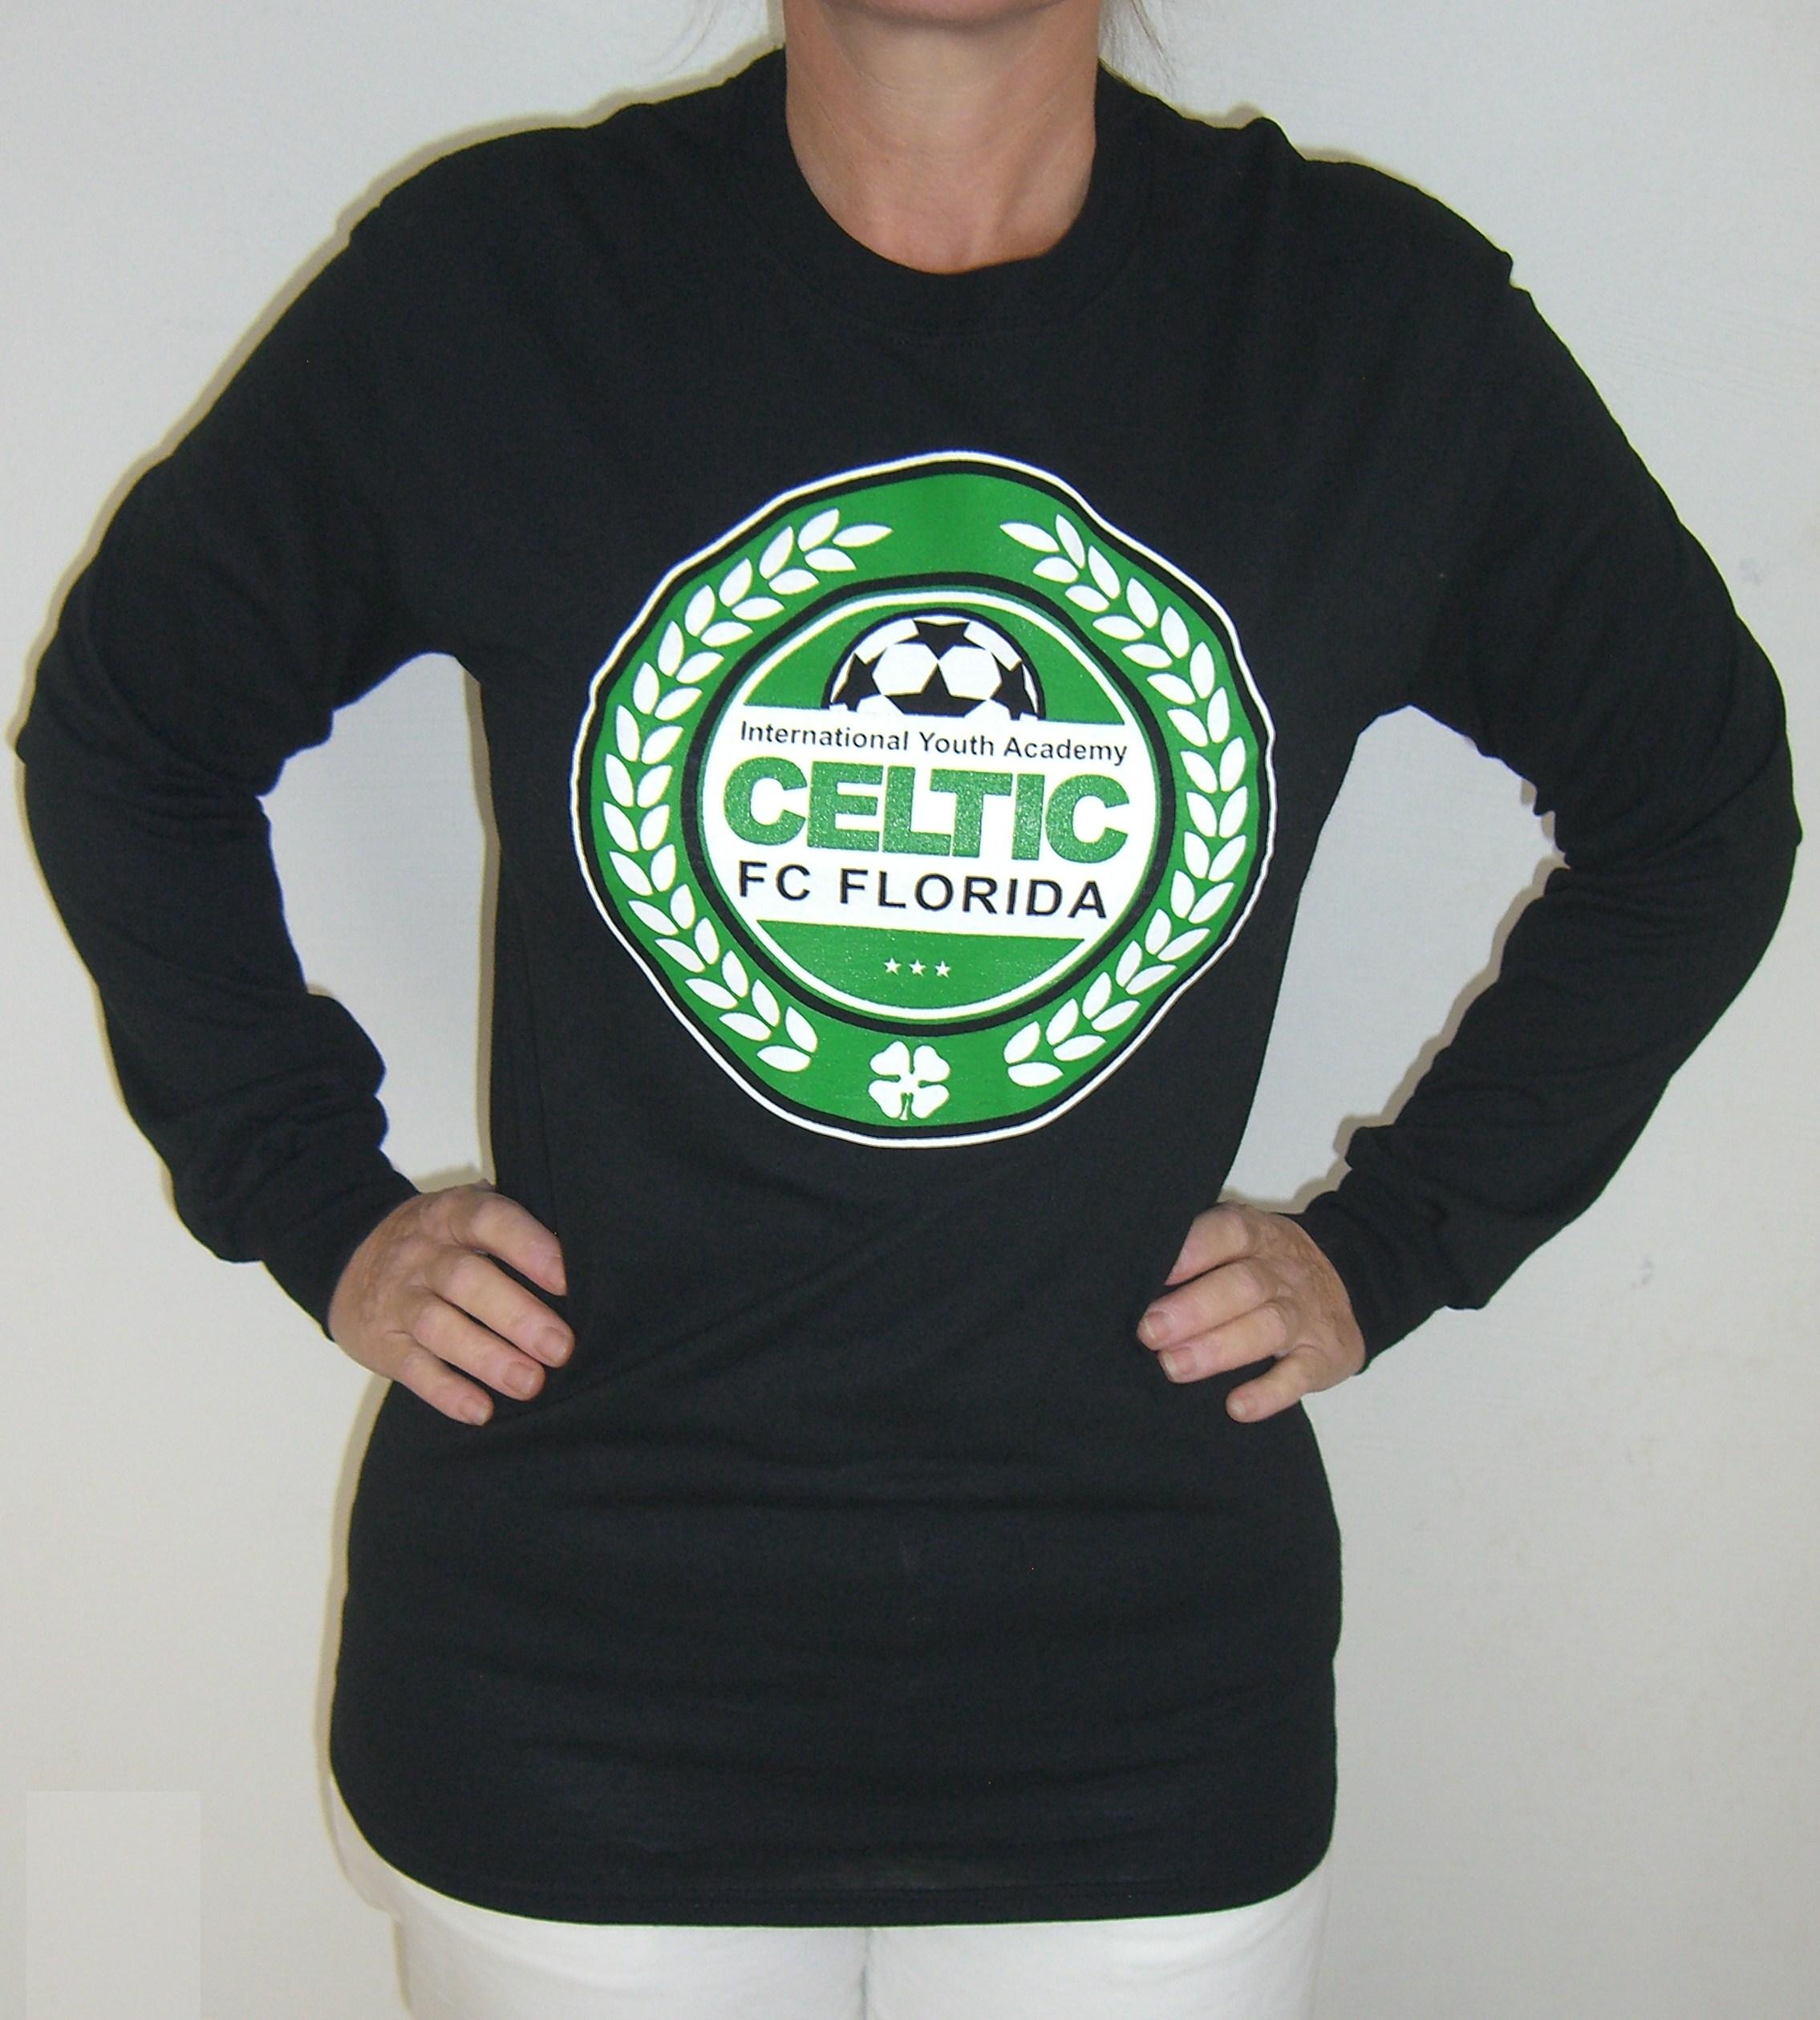 SOCCER.COM Celtic Long Sleeve T-Shirt - Size S